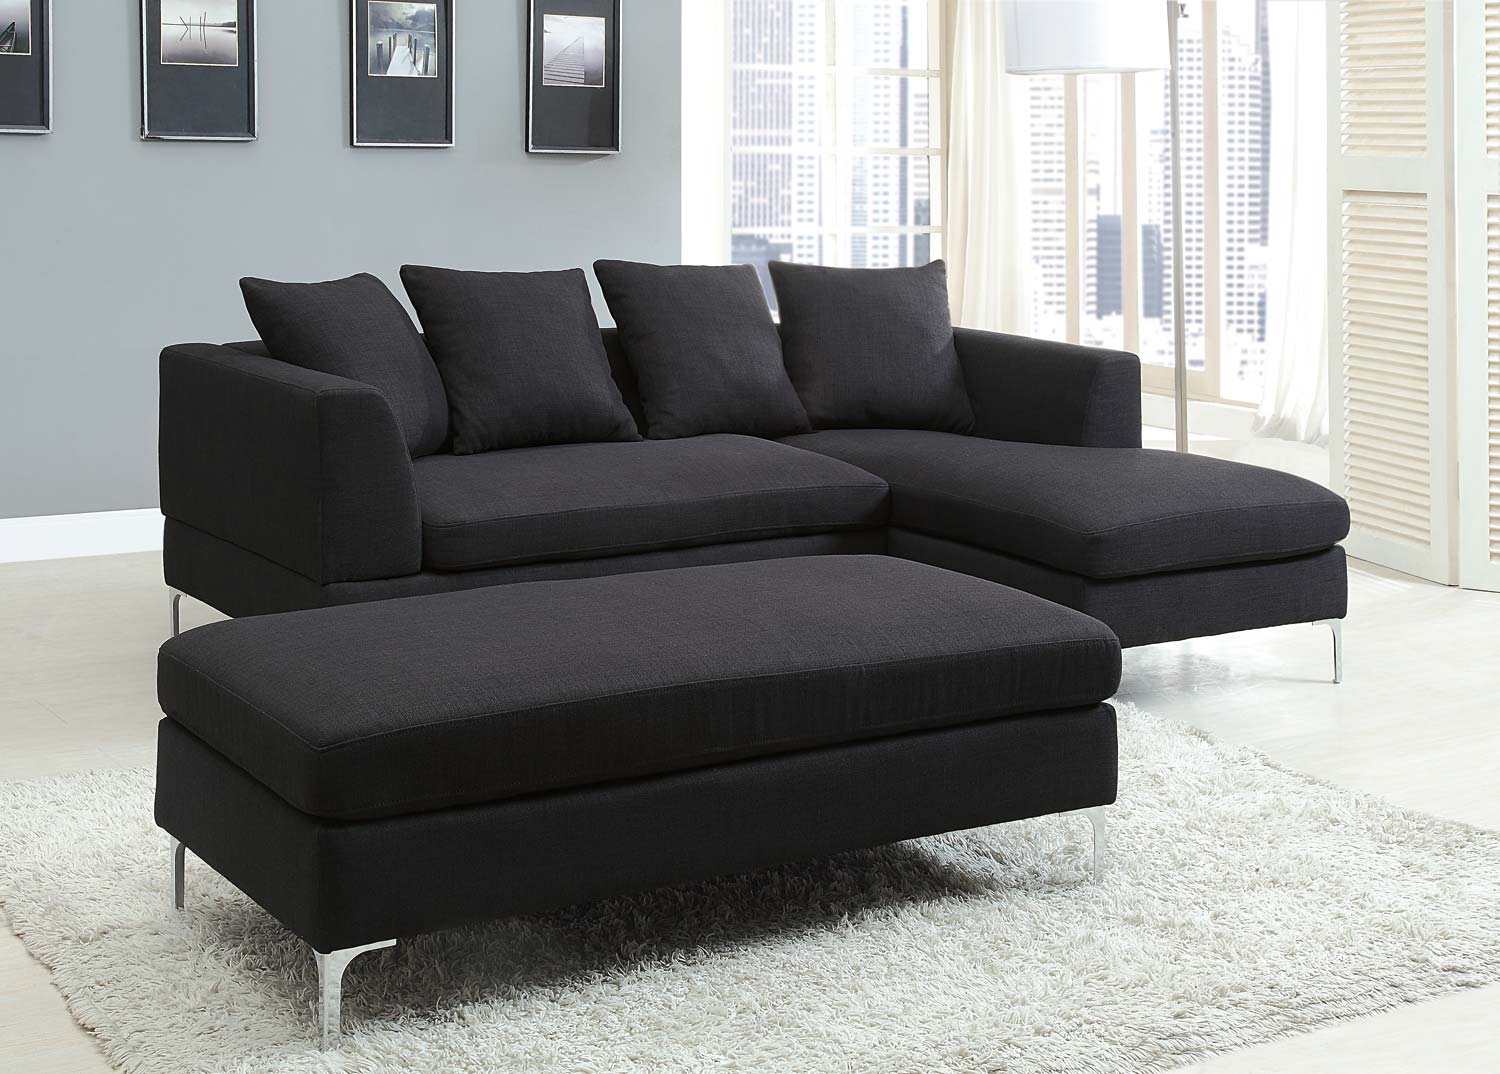 Homelegance Zola Sectional Sofa Set - Black - Linen-Like Fabric